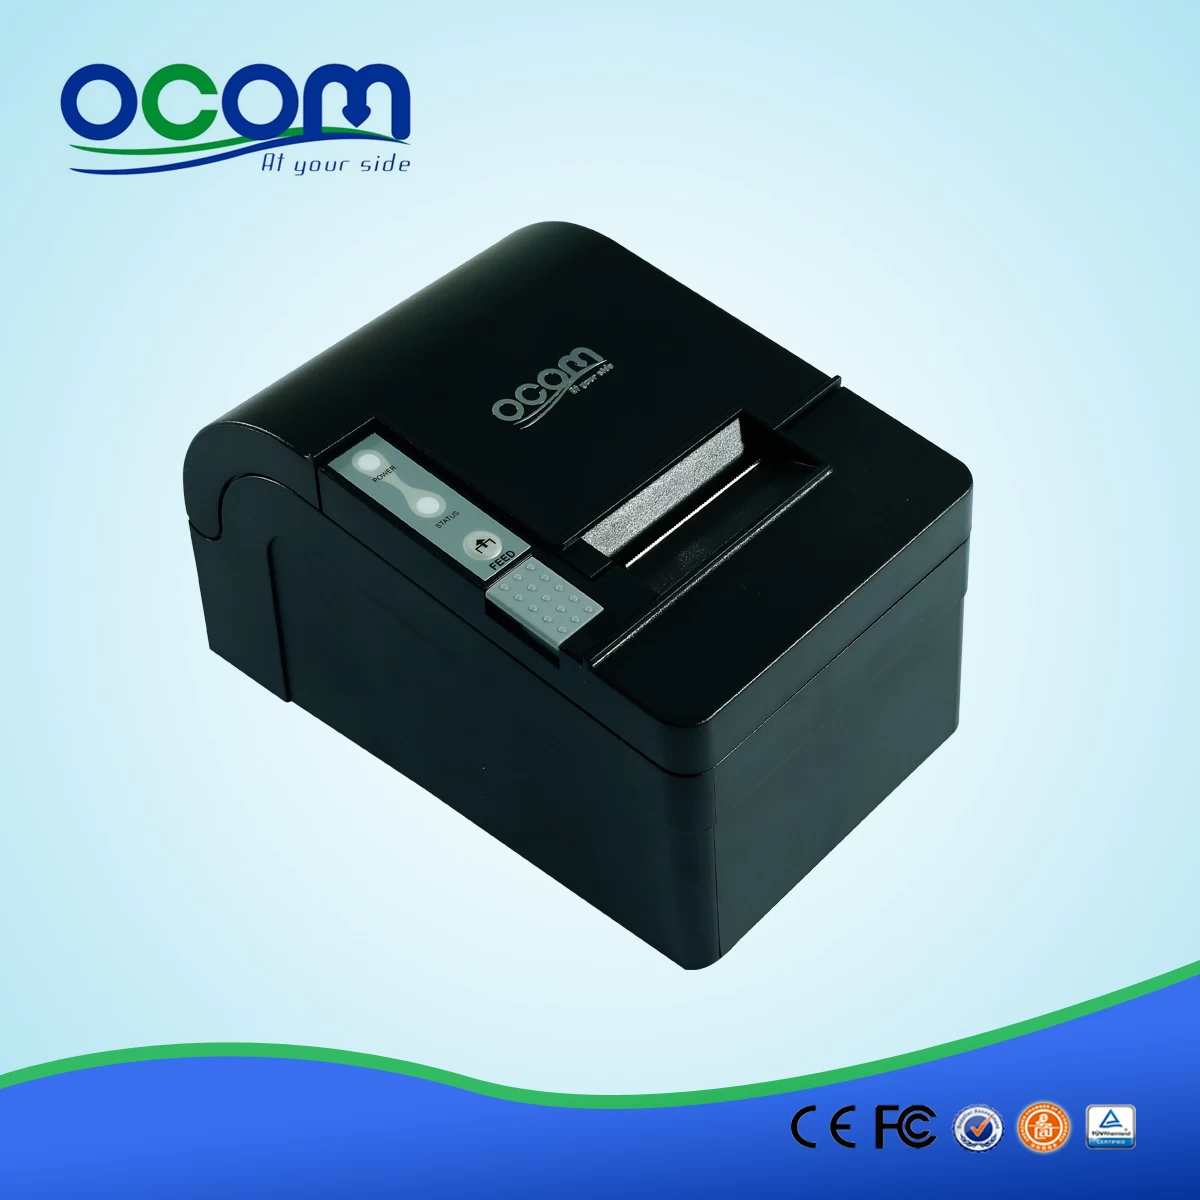 (OCPP-58C-W) High Speed Small Size WIFI Receipt Printer with Auto Cutter